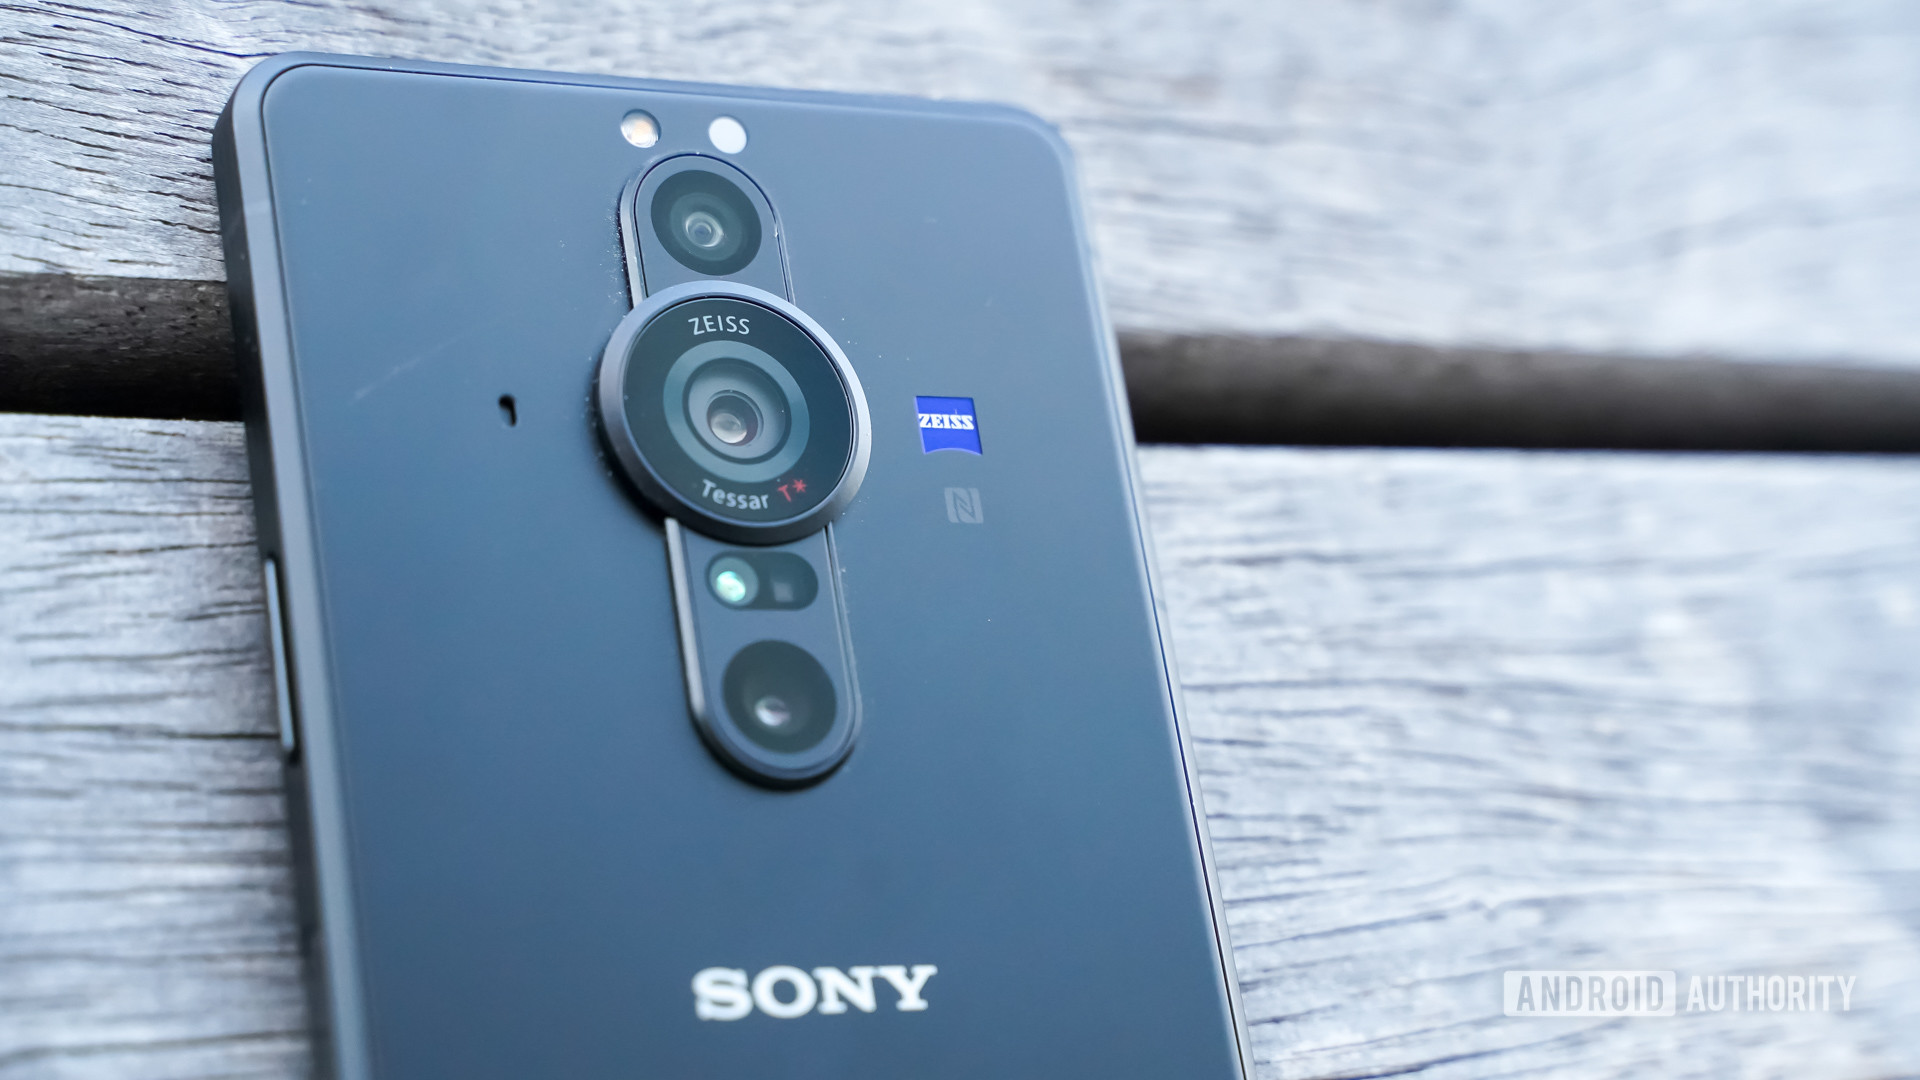 Profil de l'appareil photo Sony Xperia Pro I à partir de la gauche